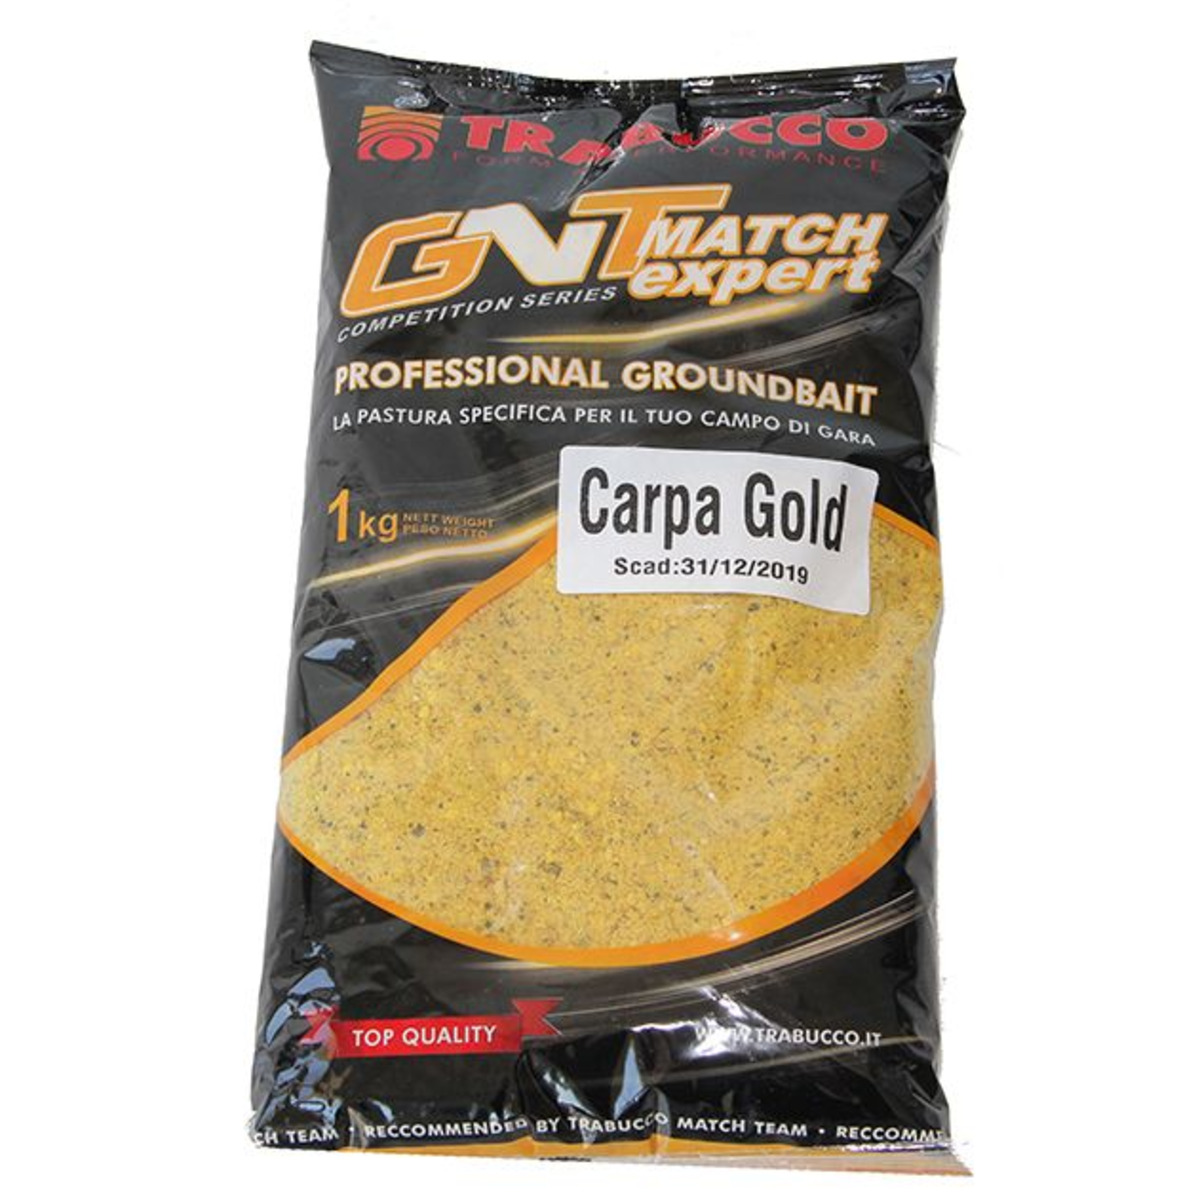 Trabucco GNT Match Expert Carpa Plus - Carpa Gold - 1 kg